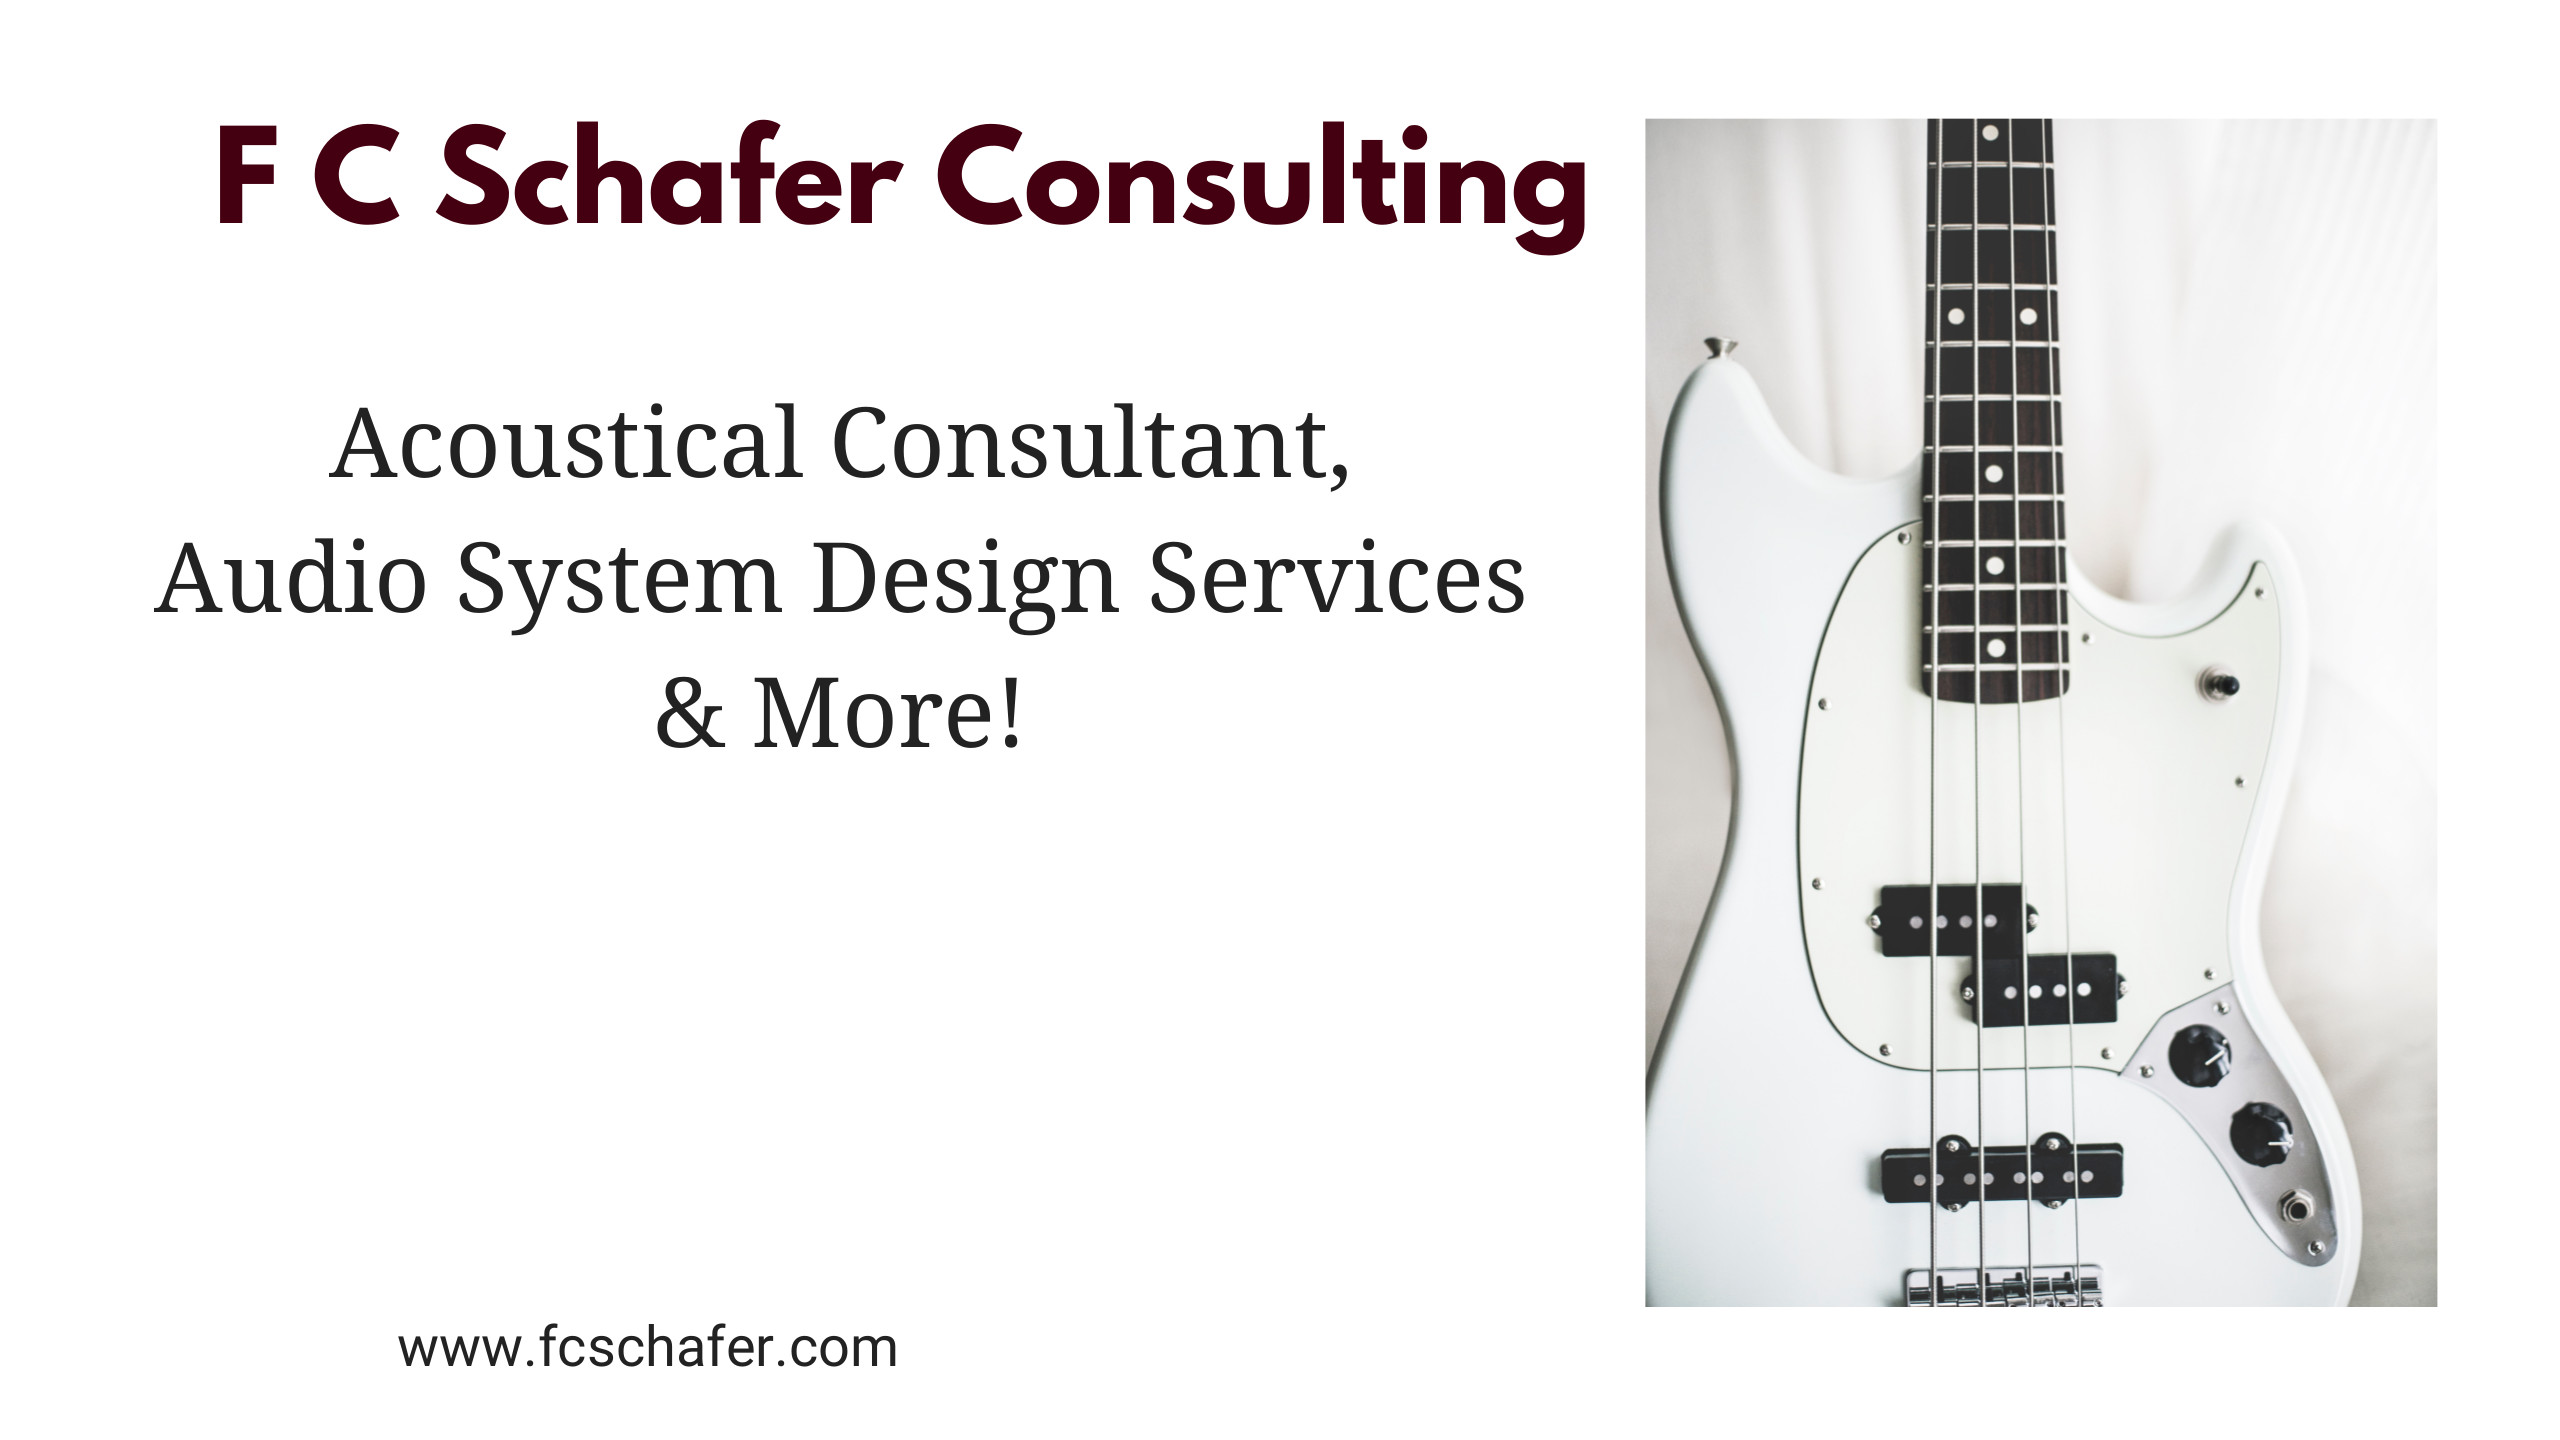 Acoustical consultant, Audio System Design Services,